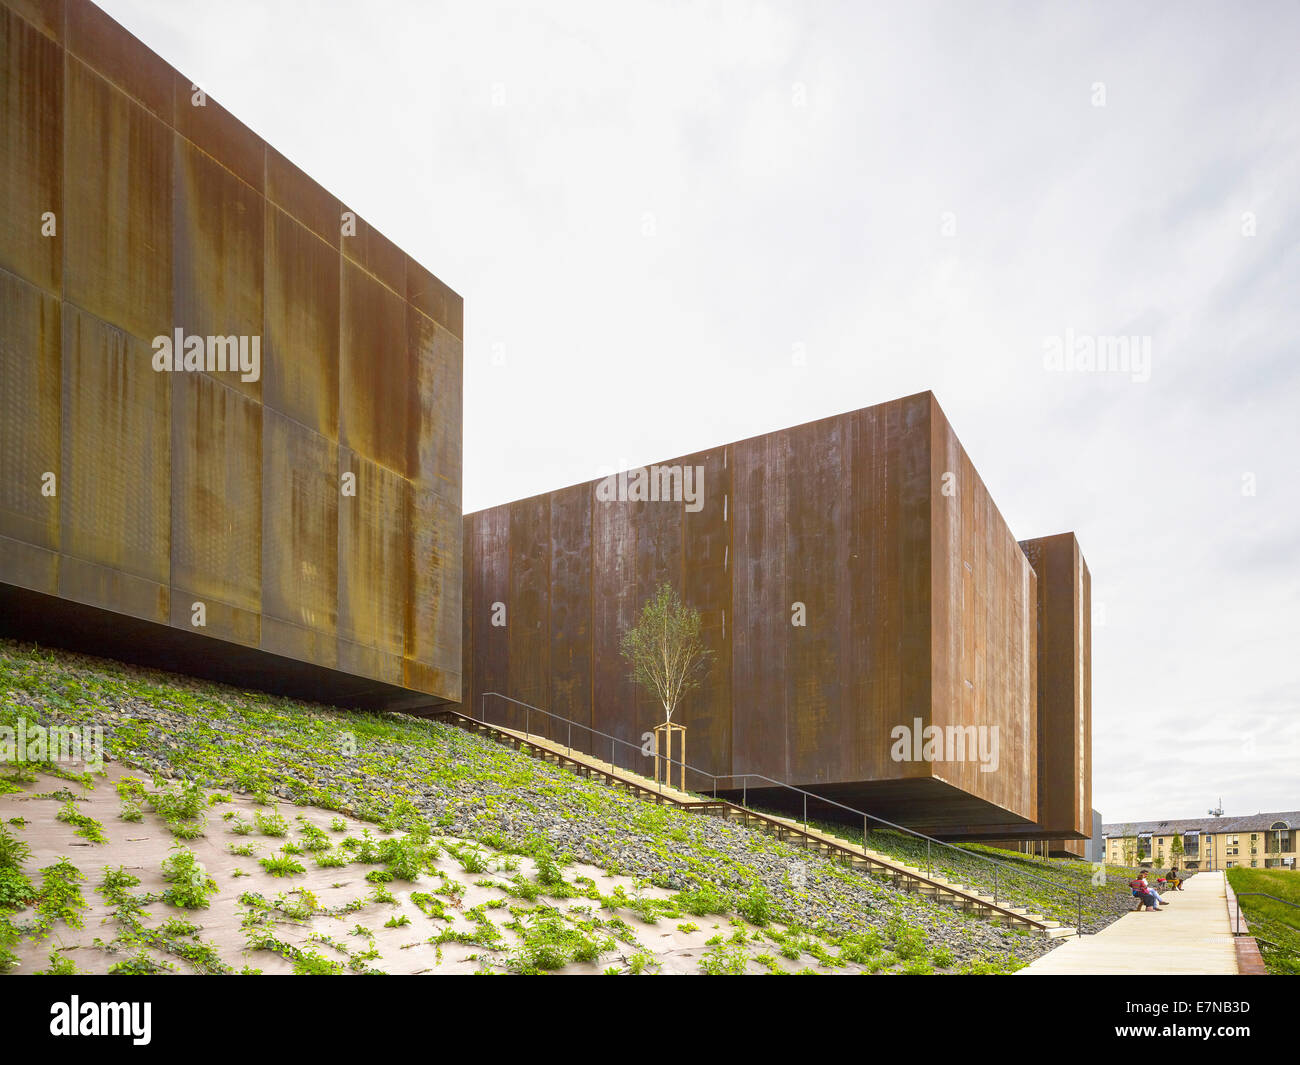 Museum Soulages, Rodez, Frankreich. Architekt: RCR Arquitectes, 2014. Rostigem Stahl Bände auskragenden am Berghang. Stockfoto